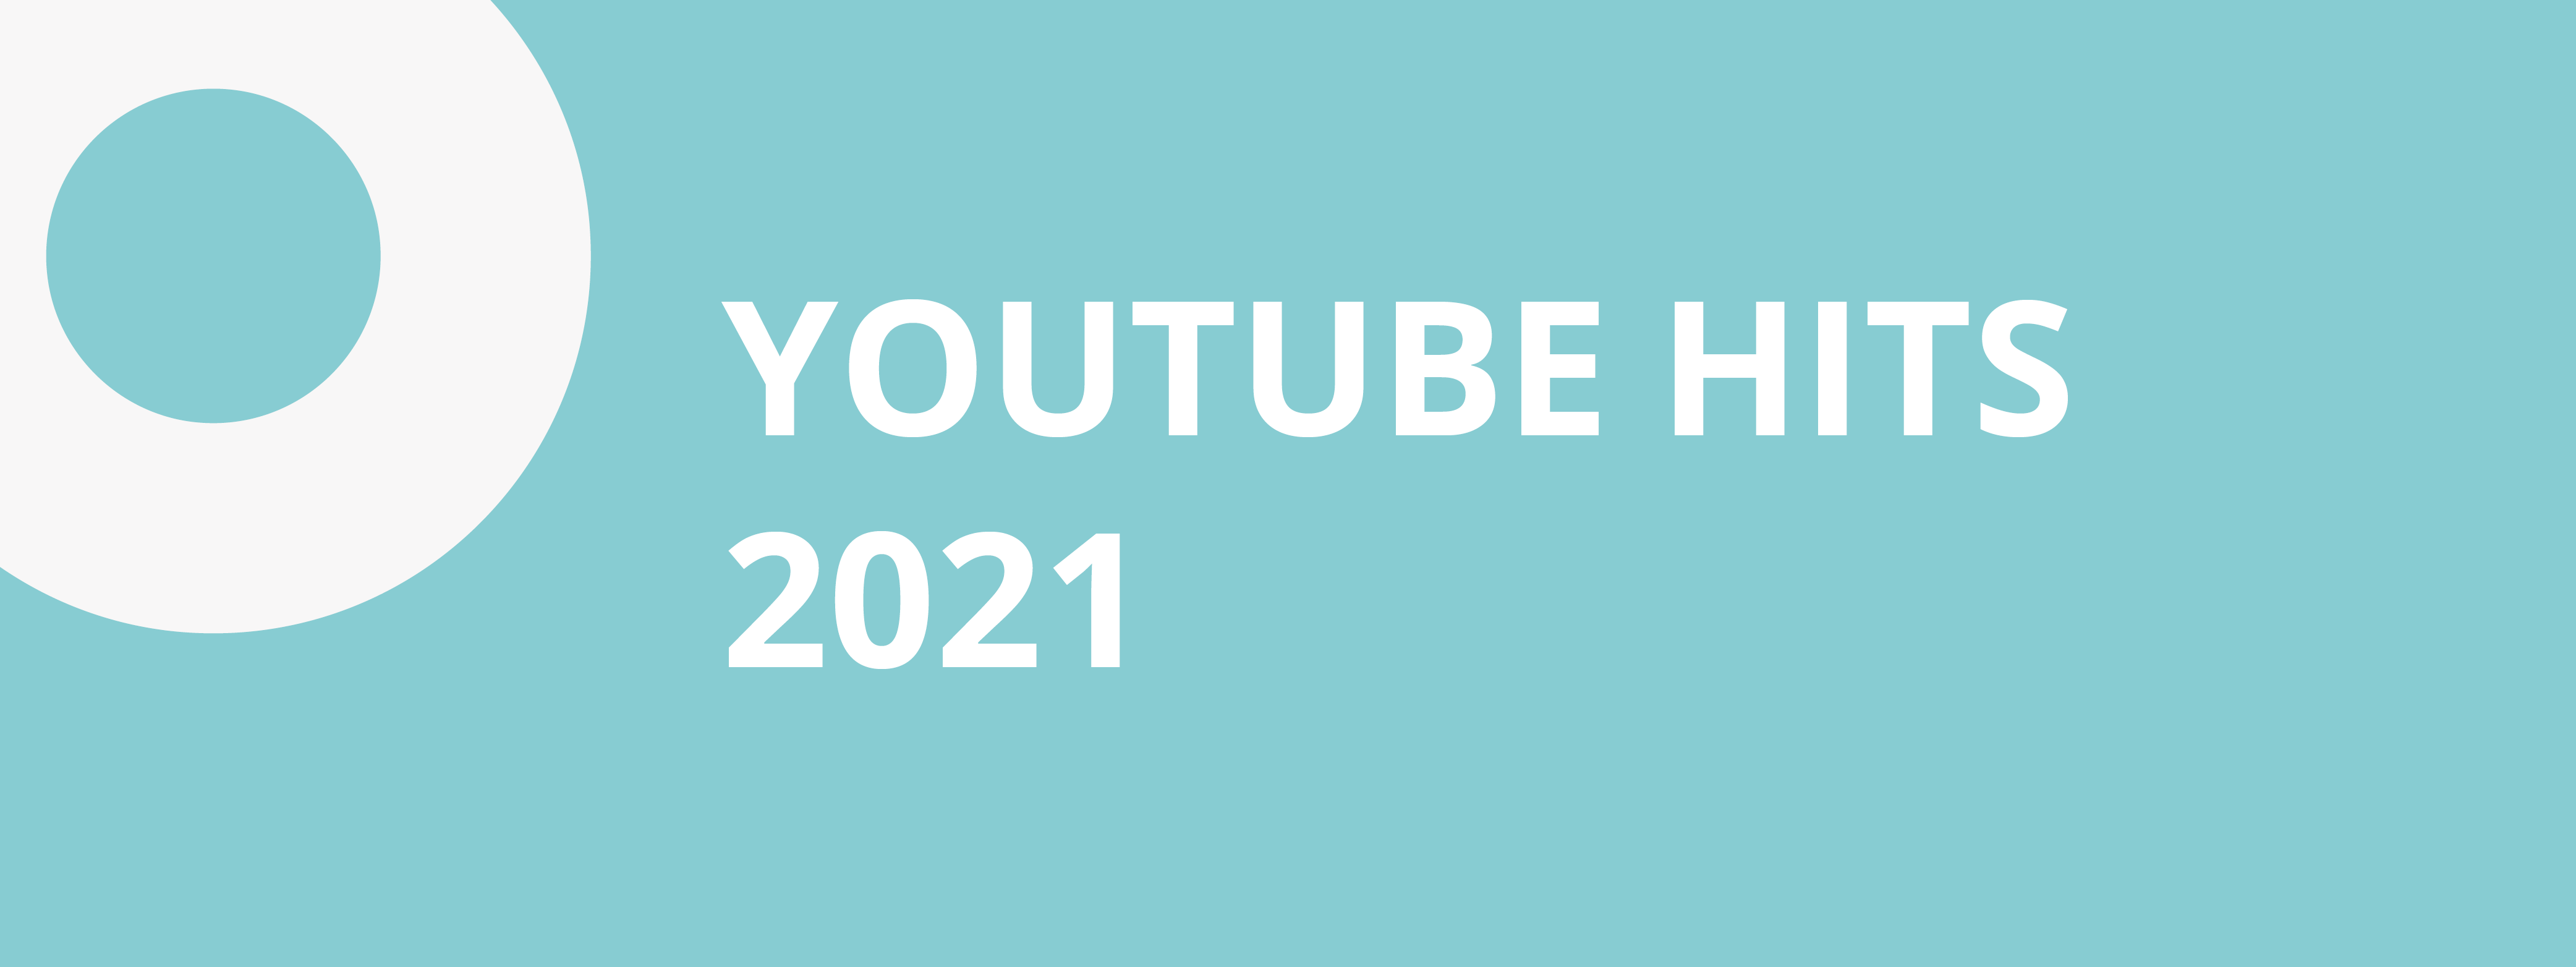 youtube hits 2021 blog how2